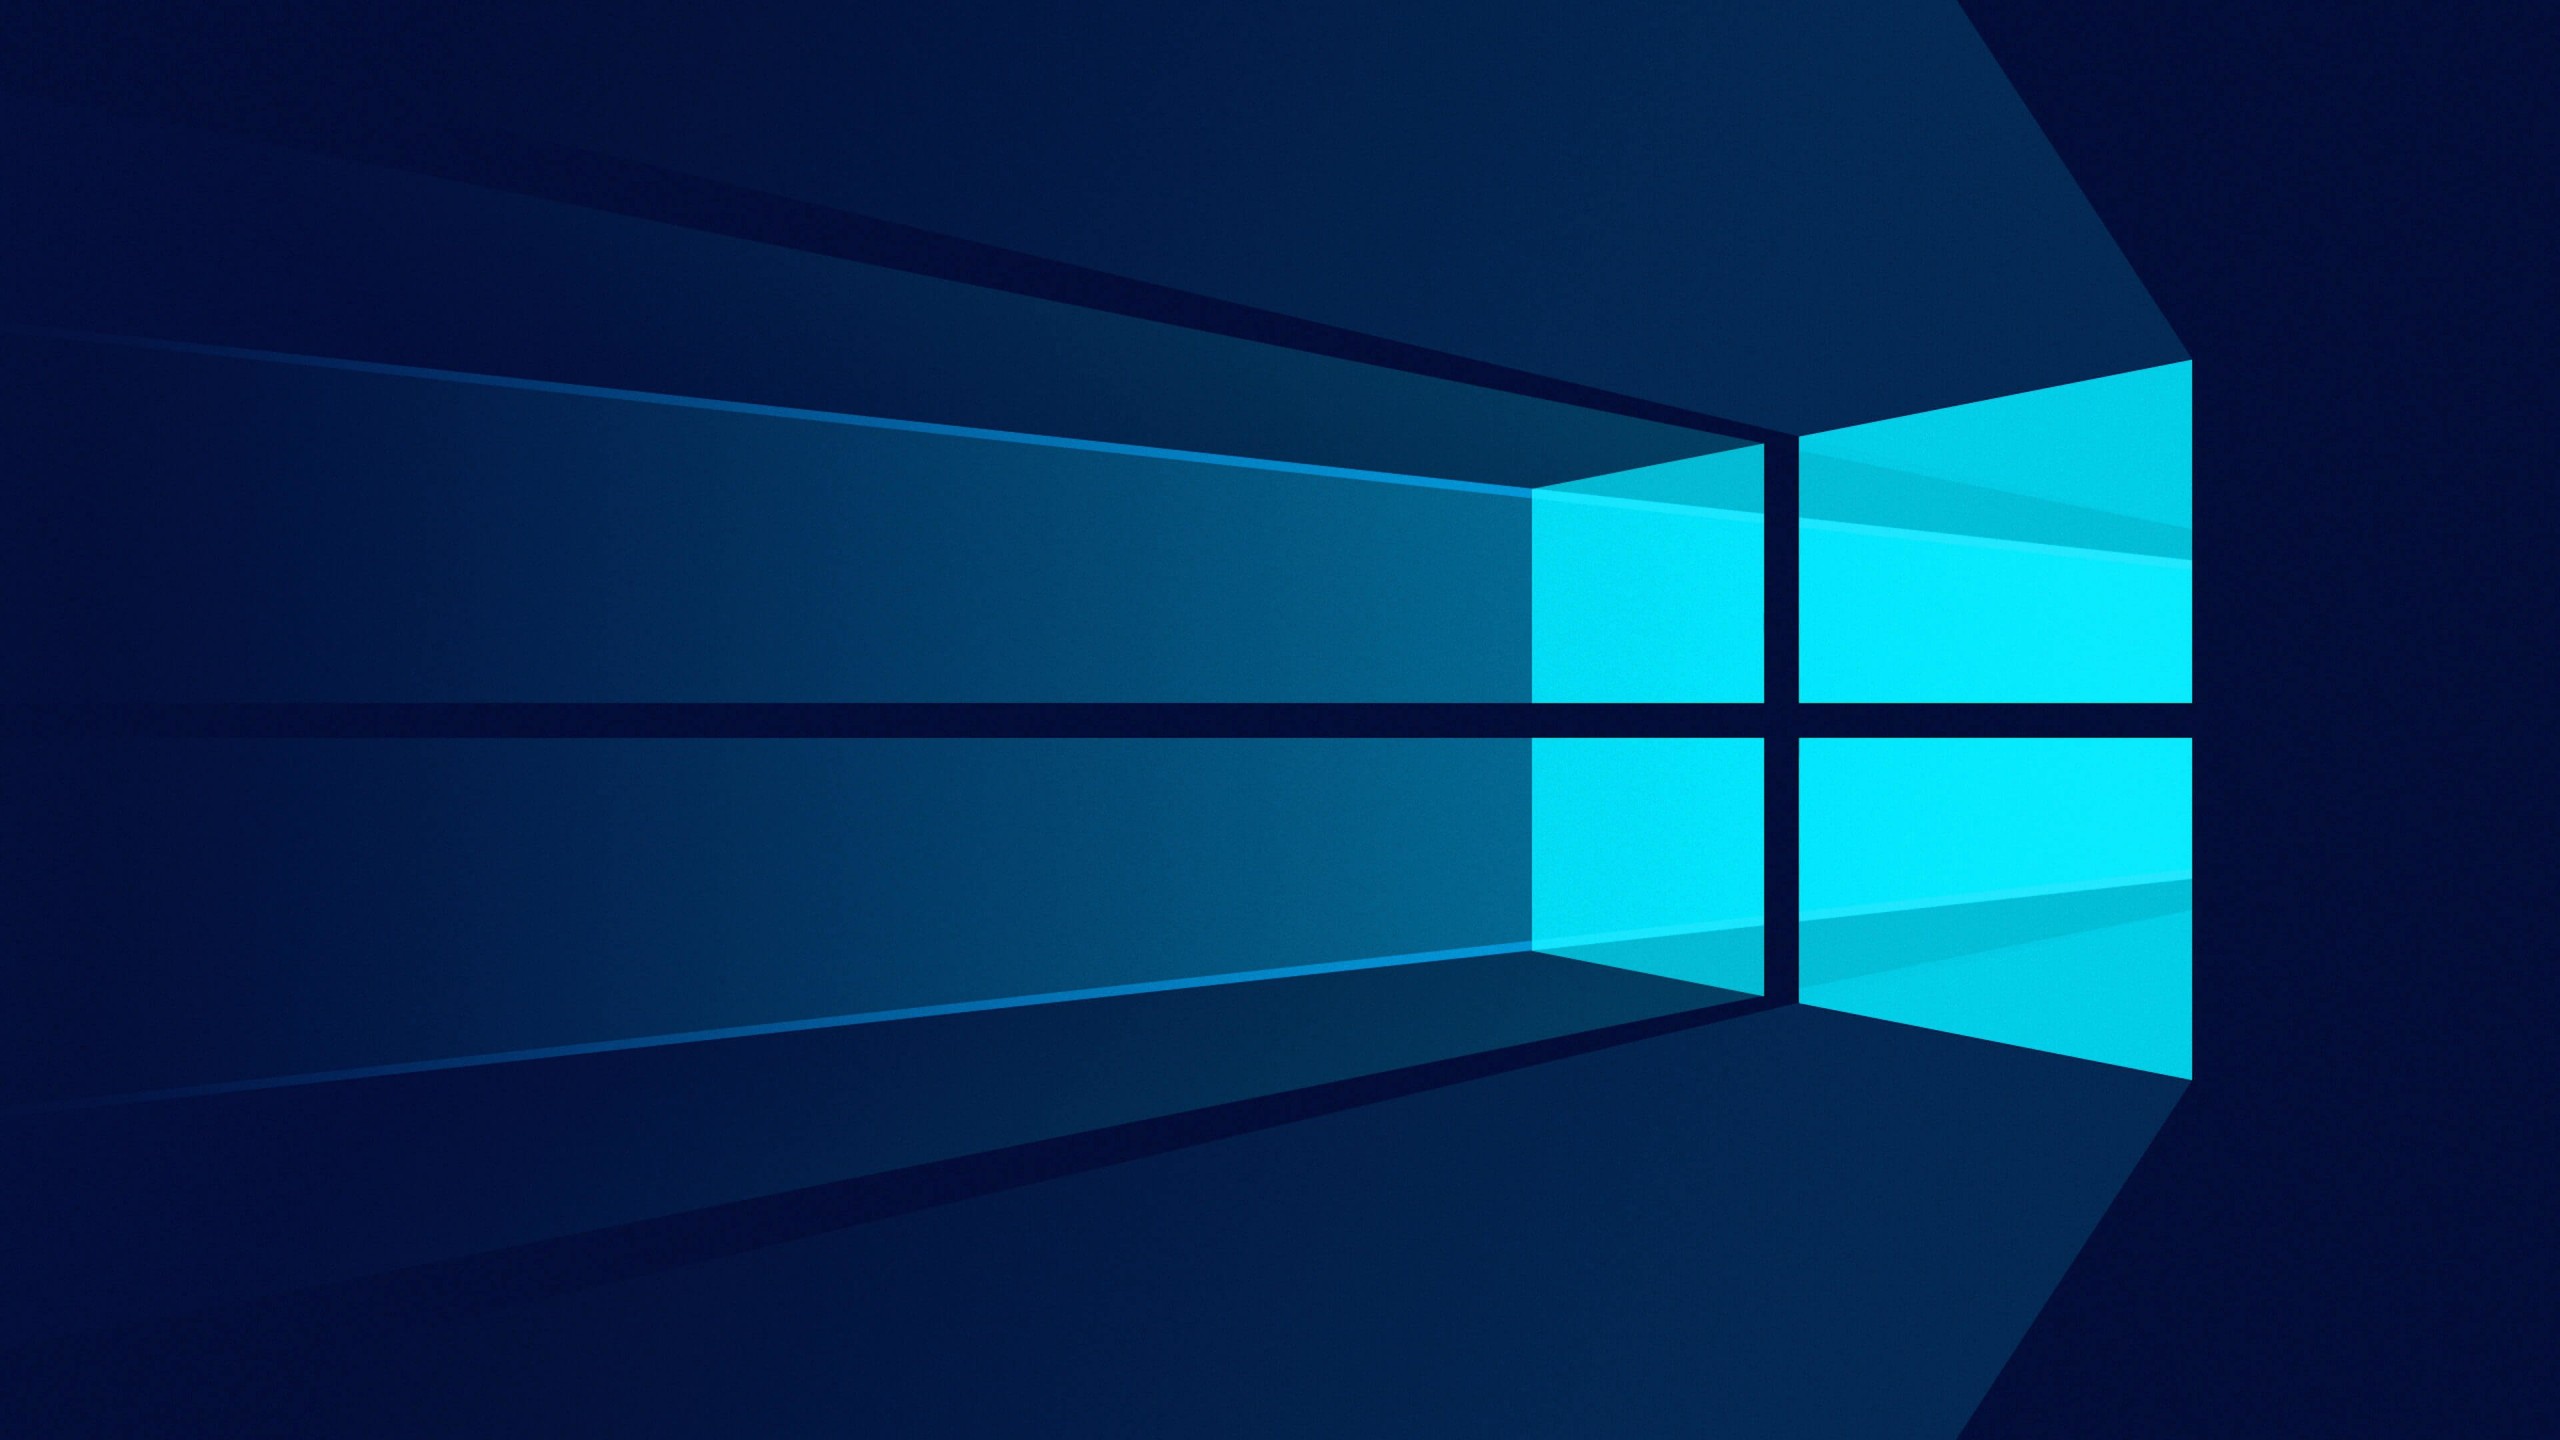 Windows 10 Flat Wallpaper for Desktop 2560x1440